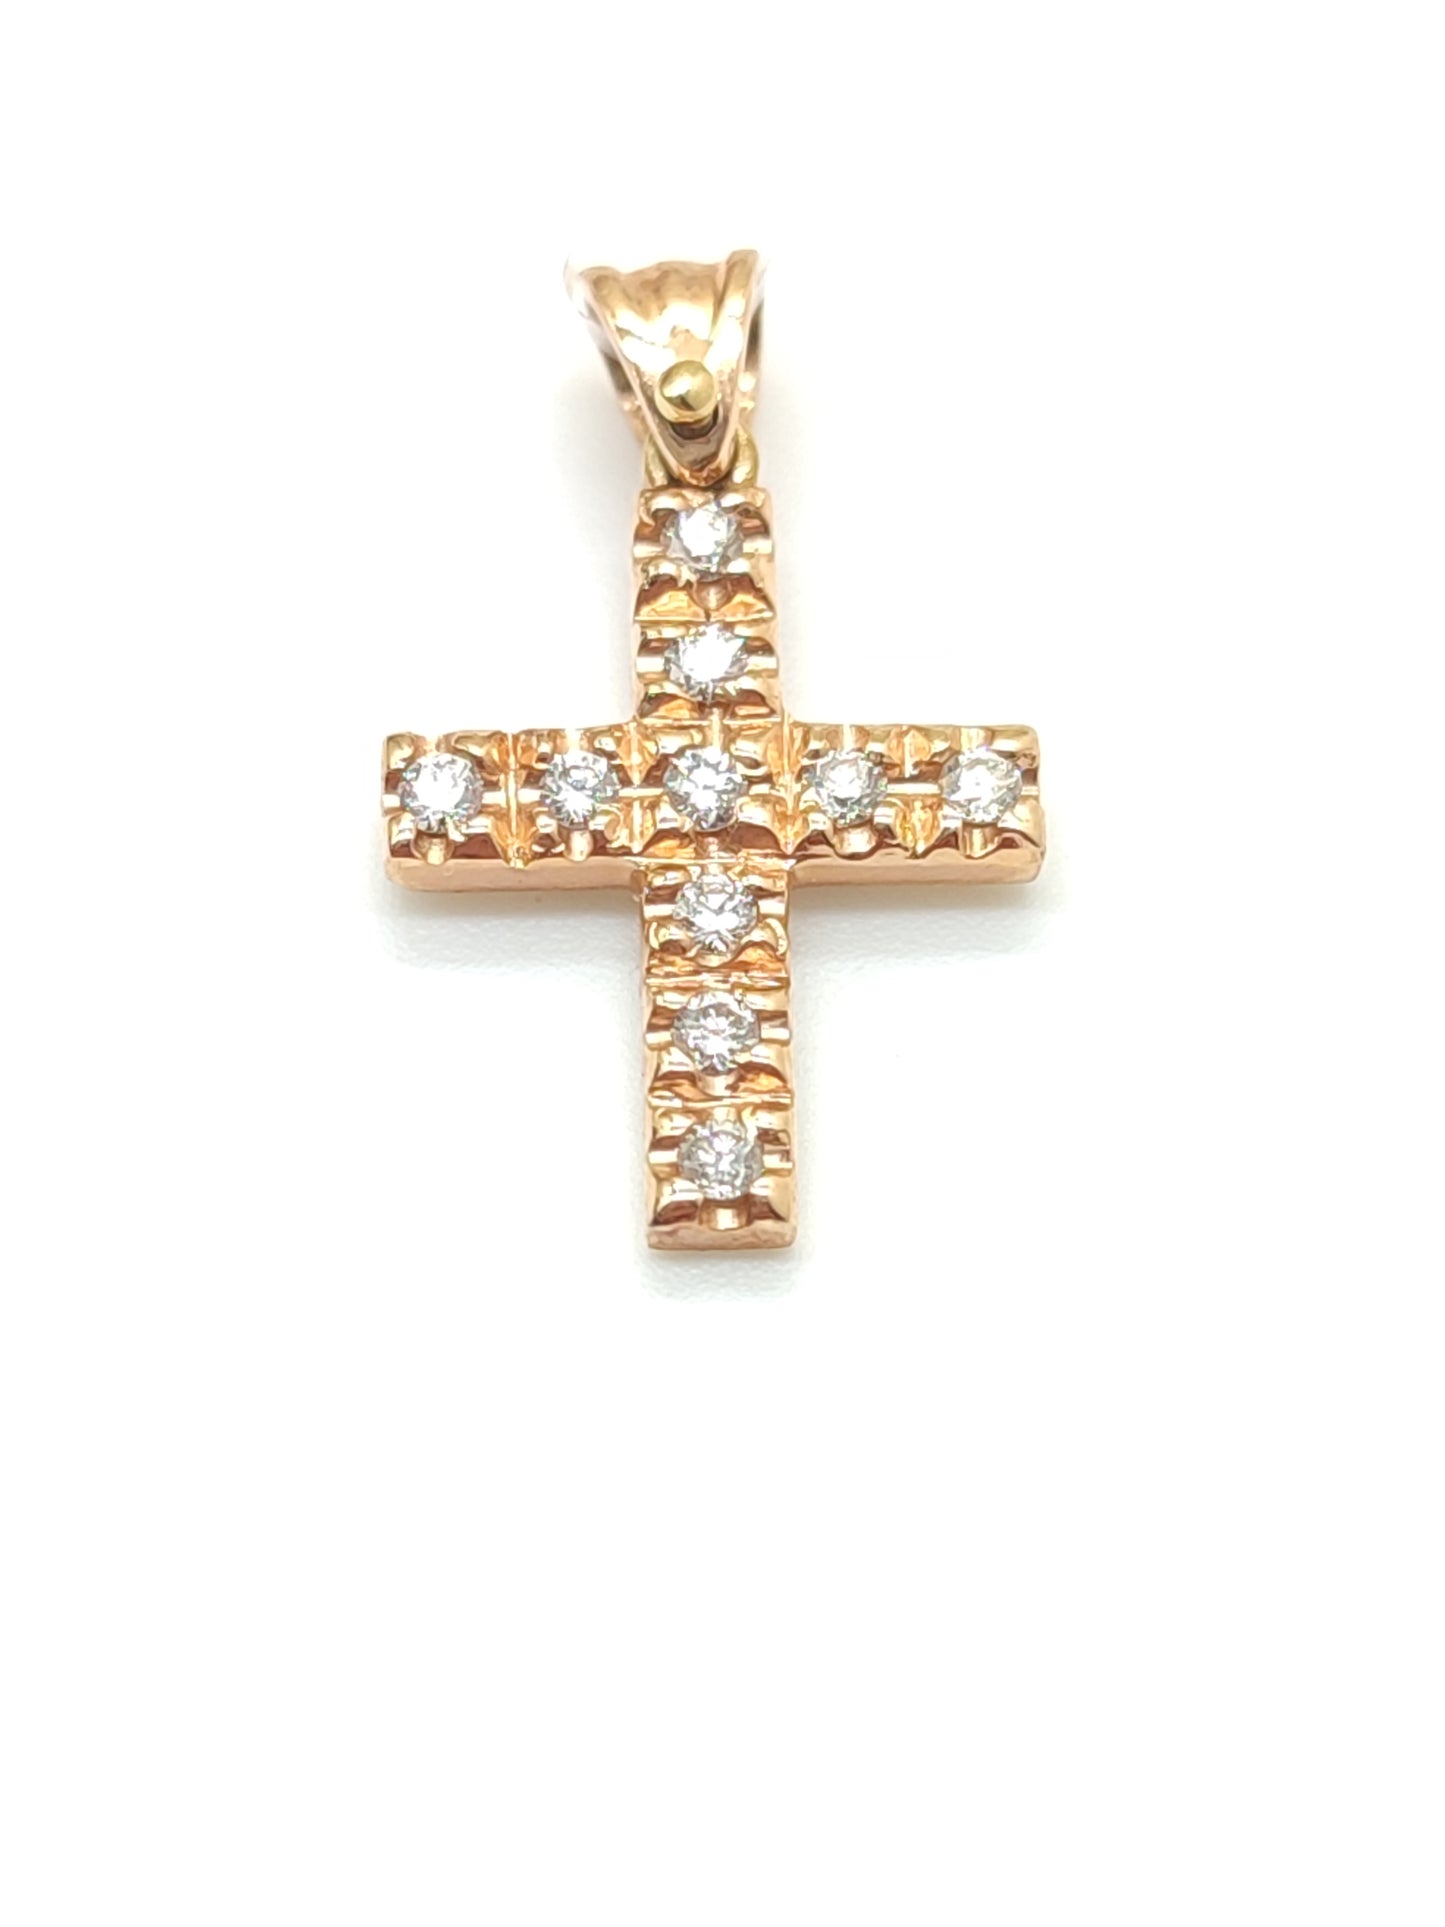 Gold cross pendant with diamonds